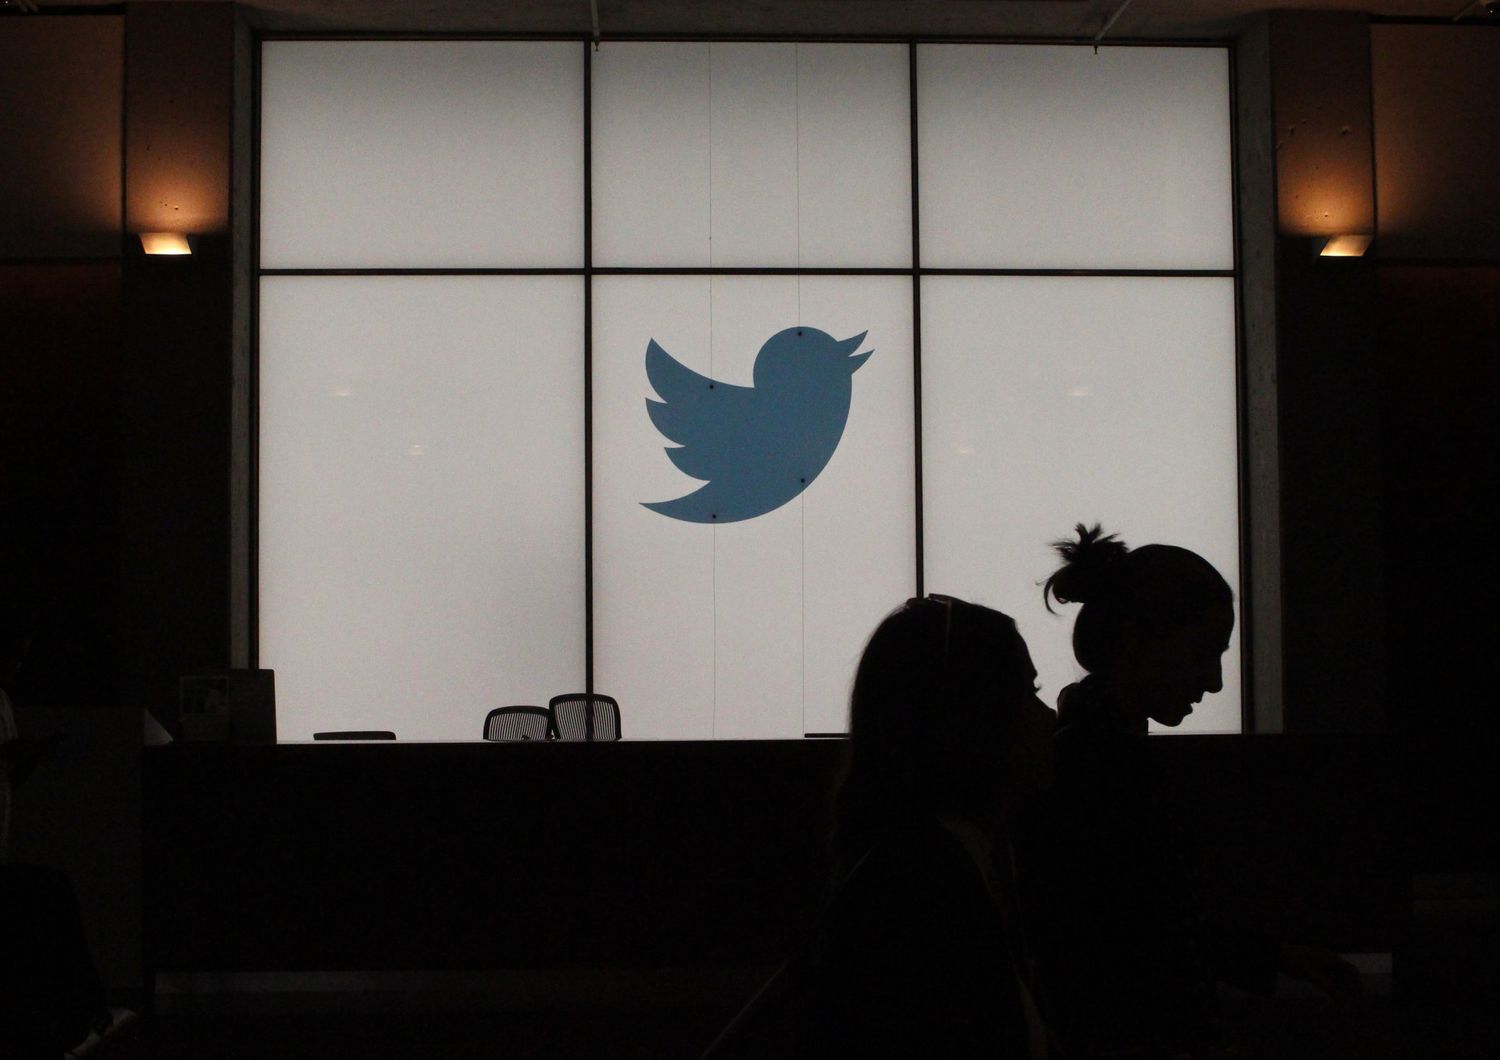 Twitter: dipendenti in smart working a tempo indeterminato